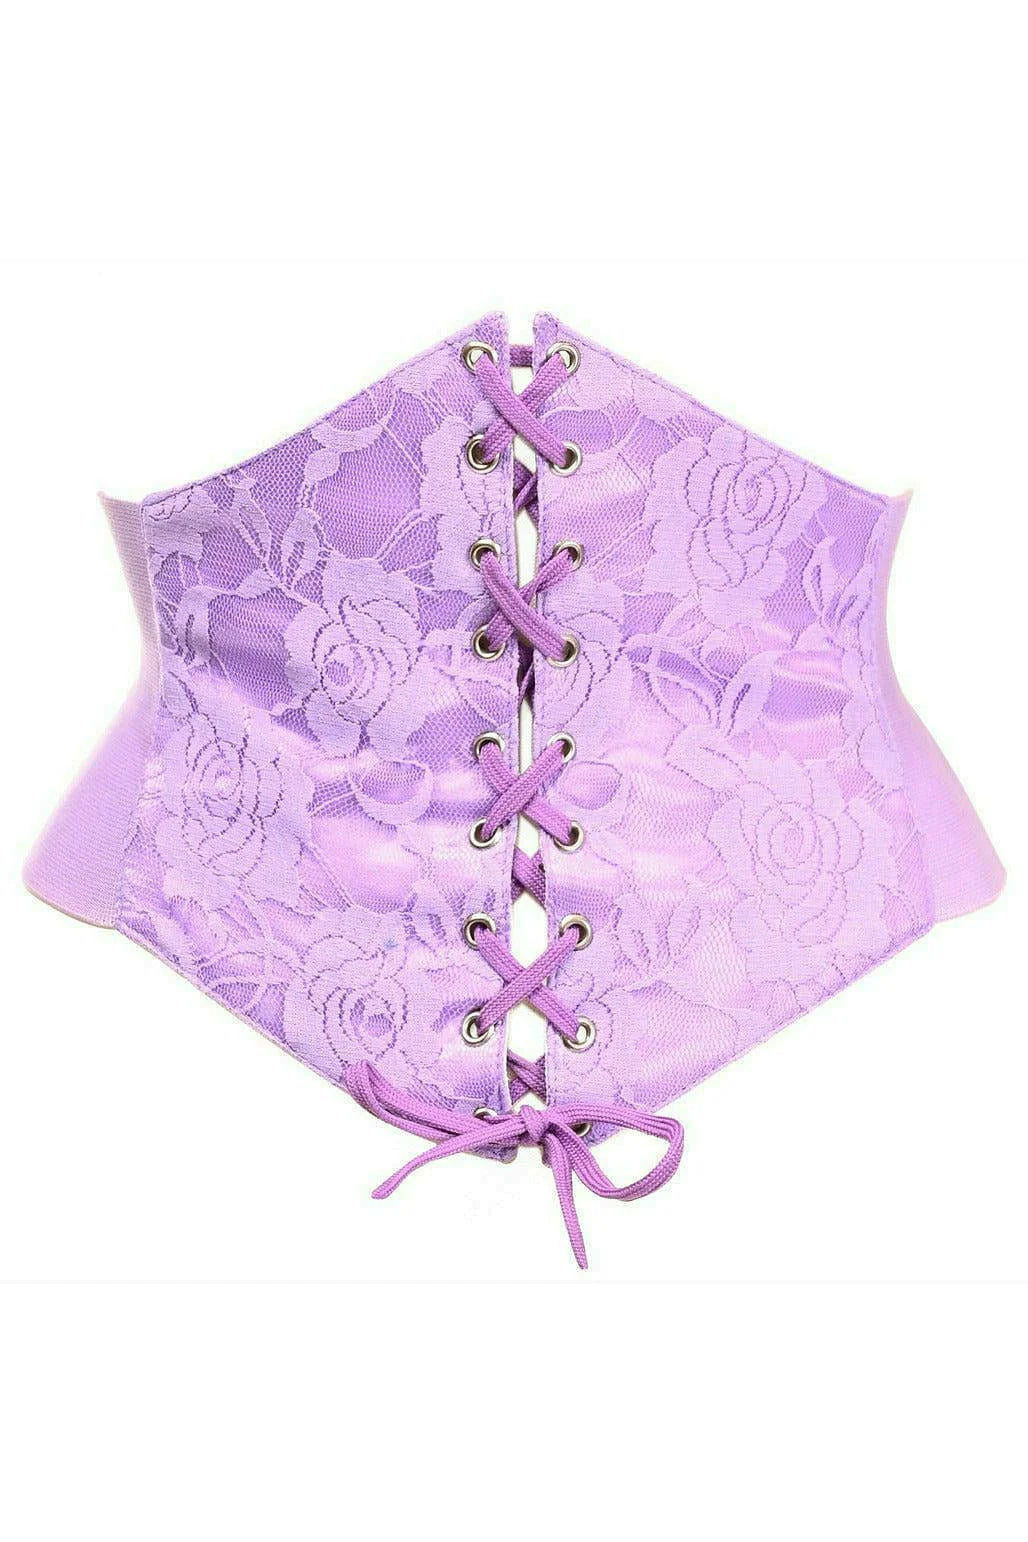 Lavish Lace Corset Belt Cincher In Purple - Daisy Corsets